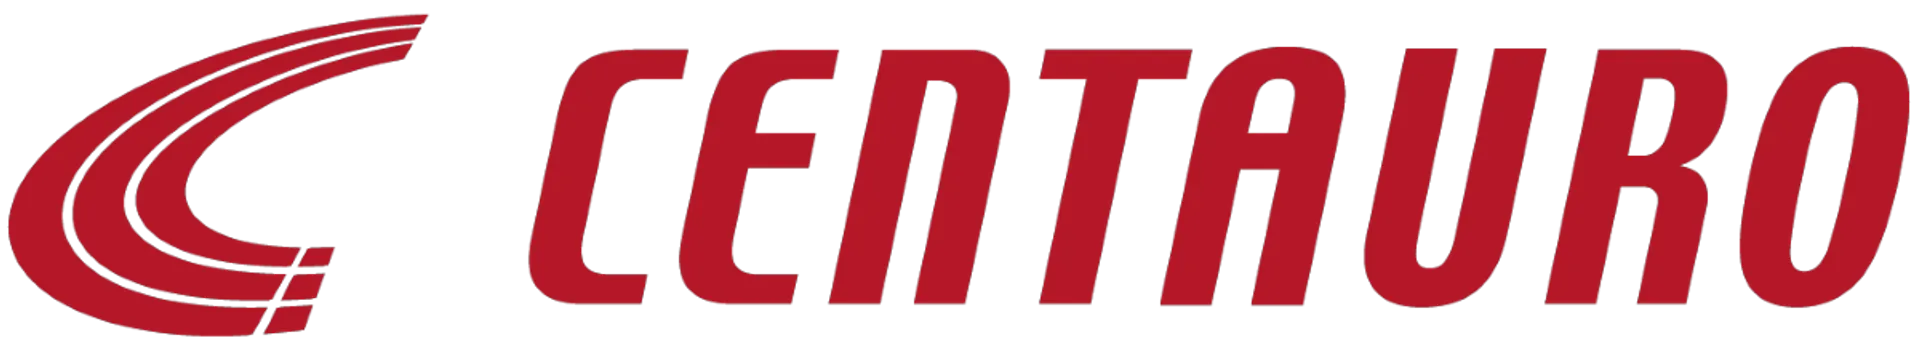 CENTAURO logo